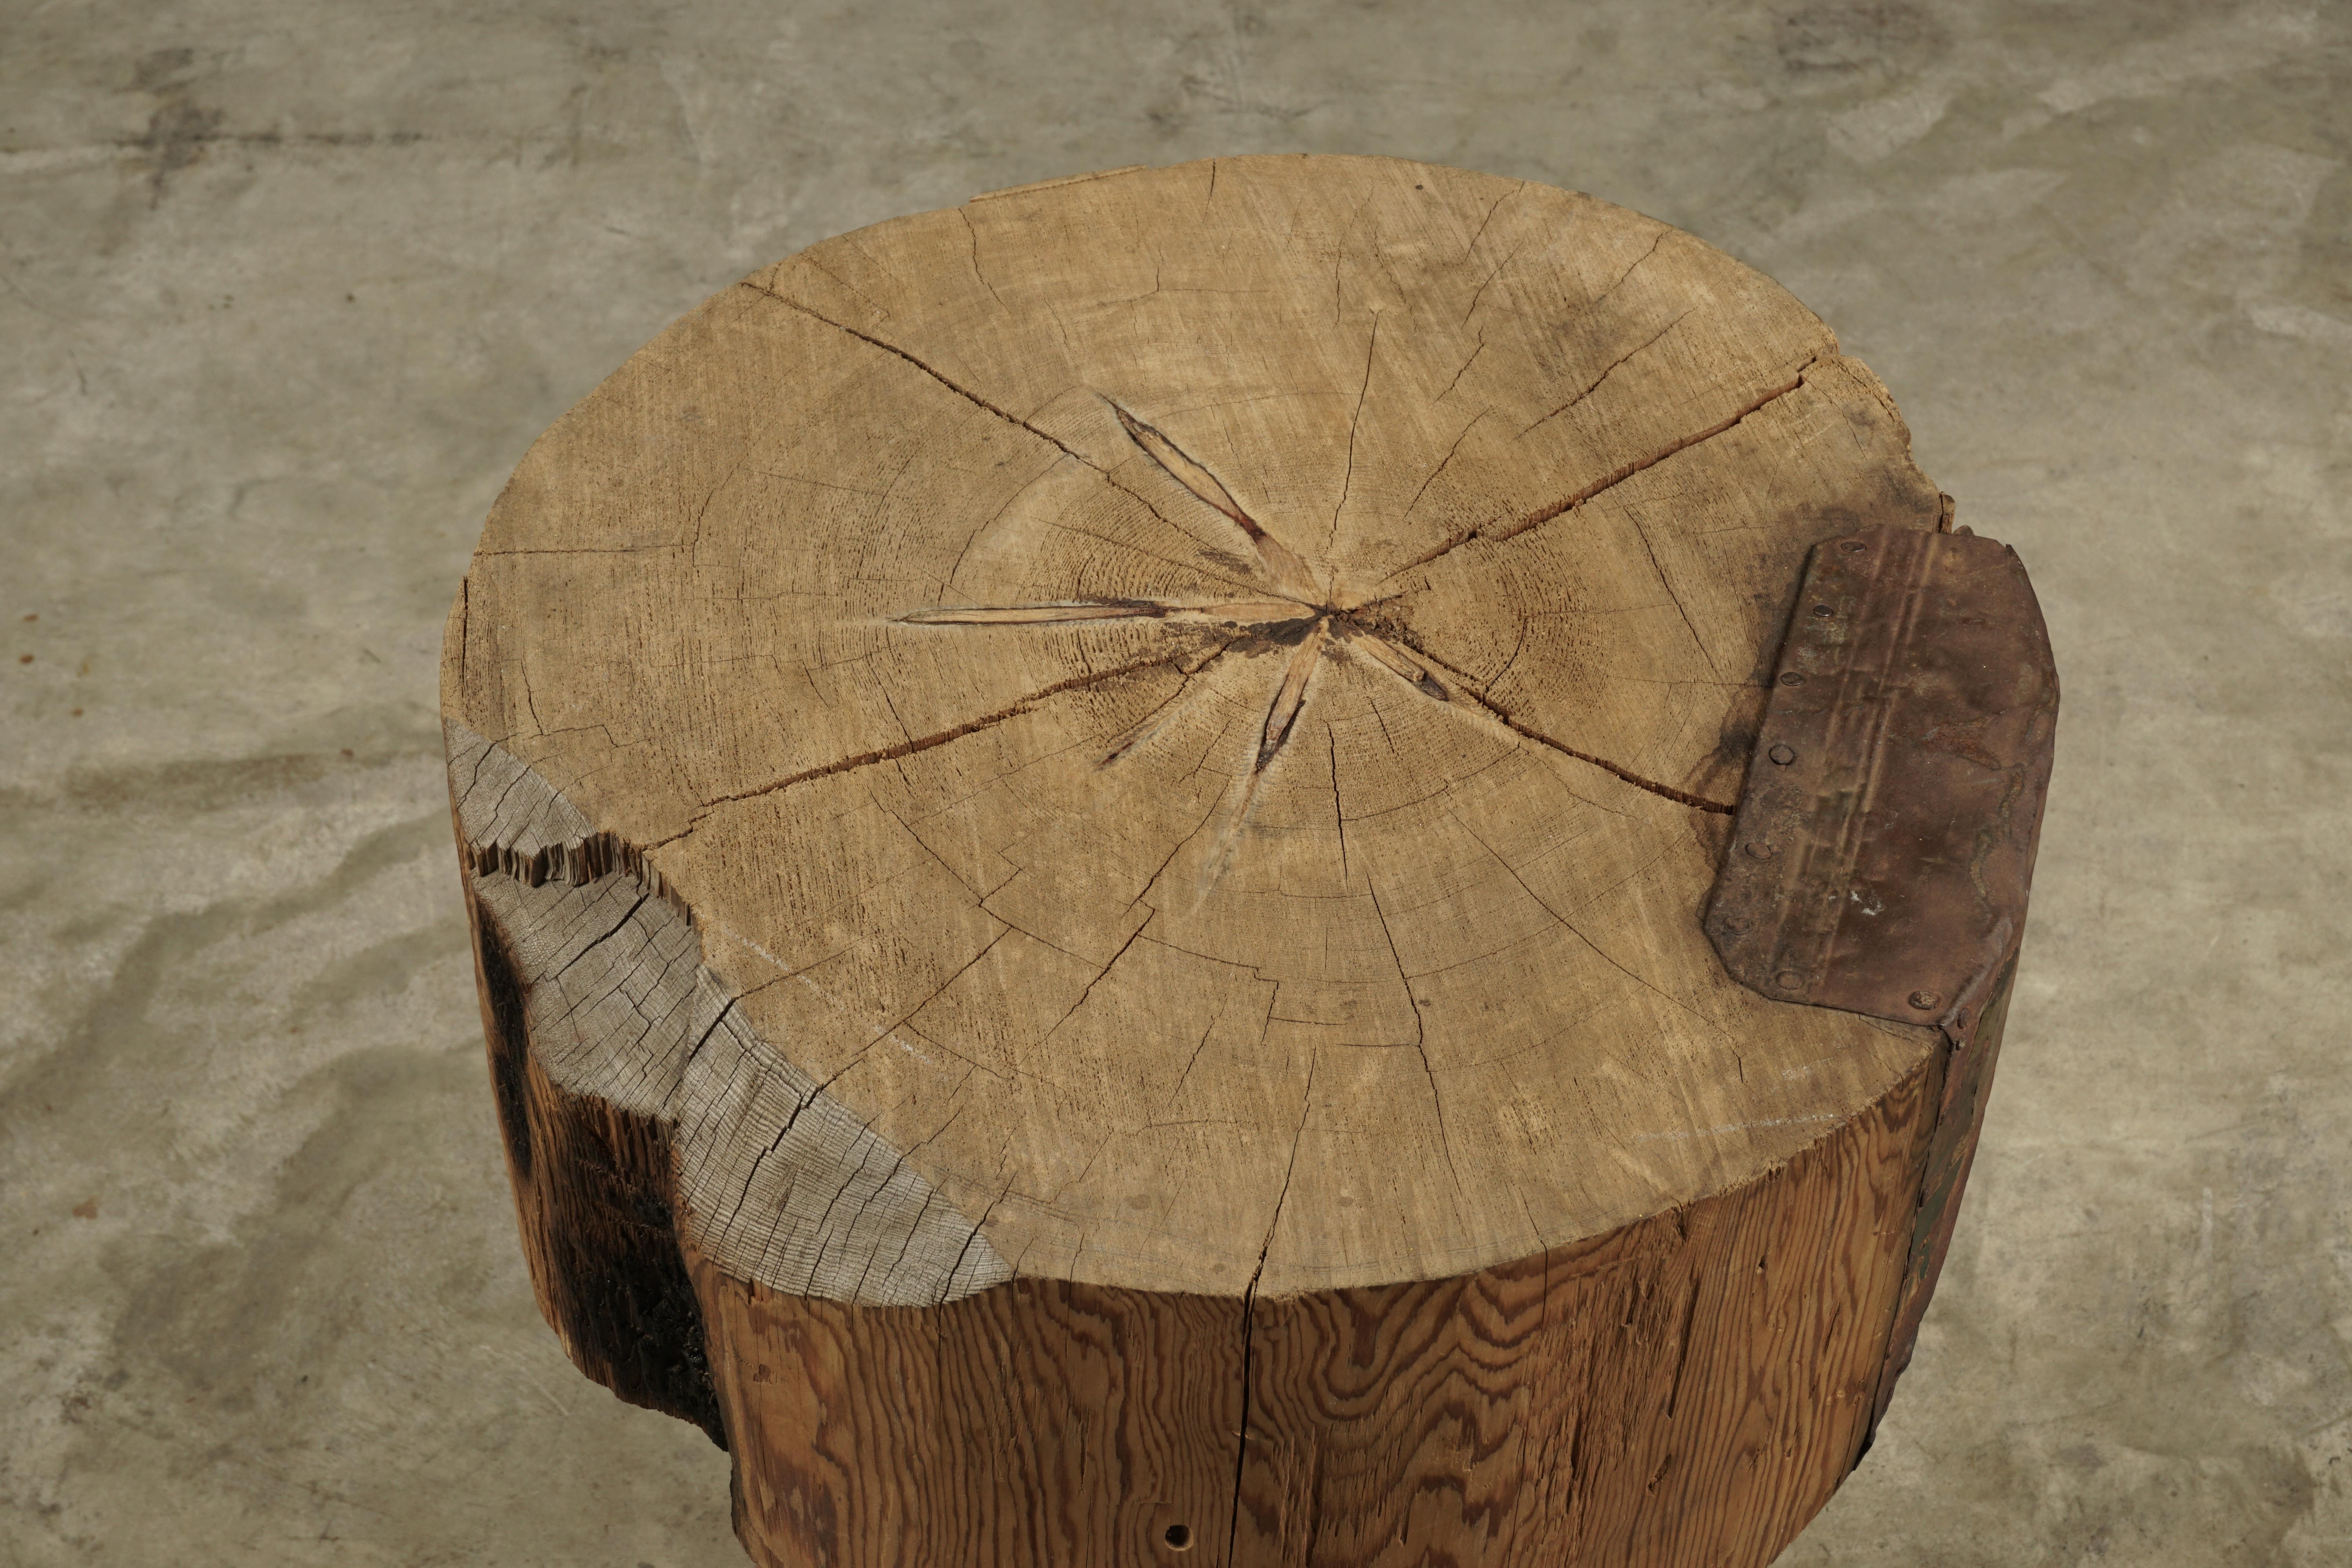 European Rare Stump Table in Pine from Sweden, circa 1850